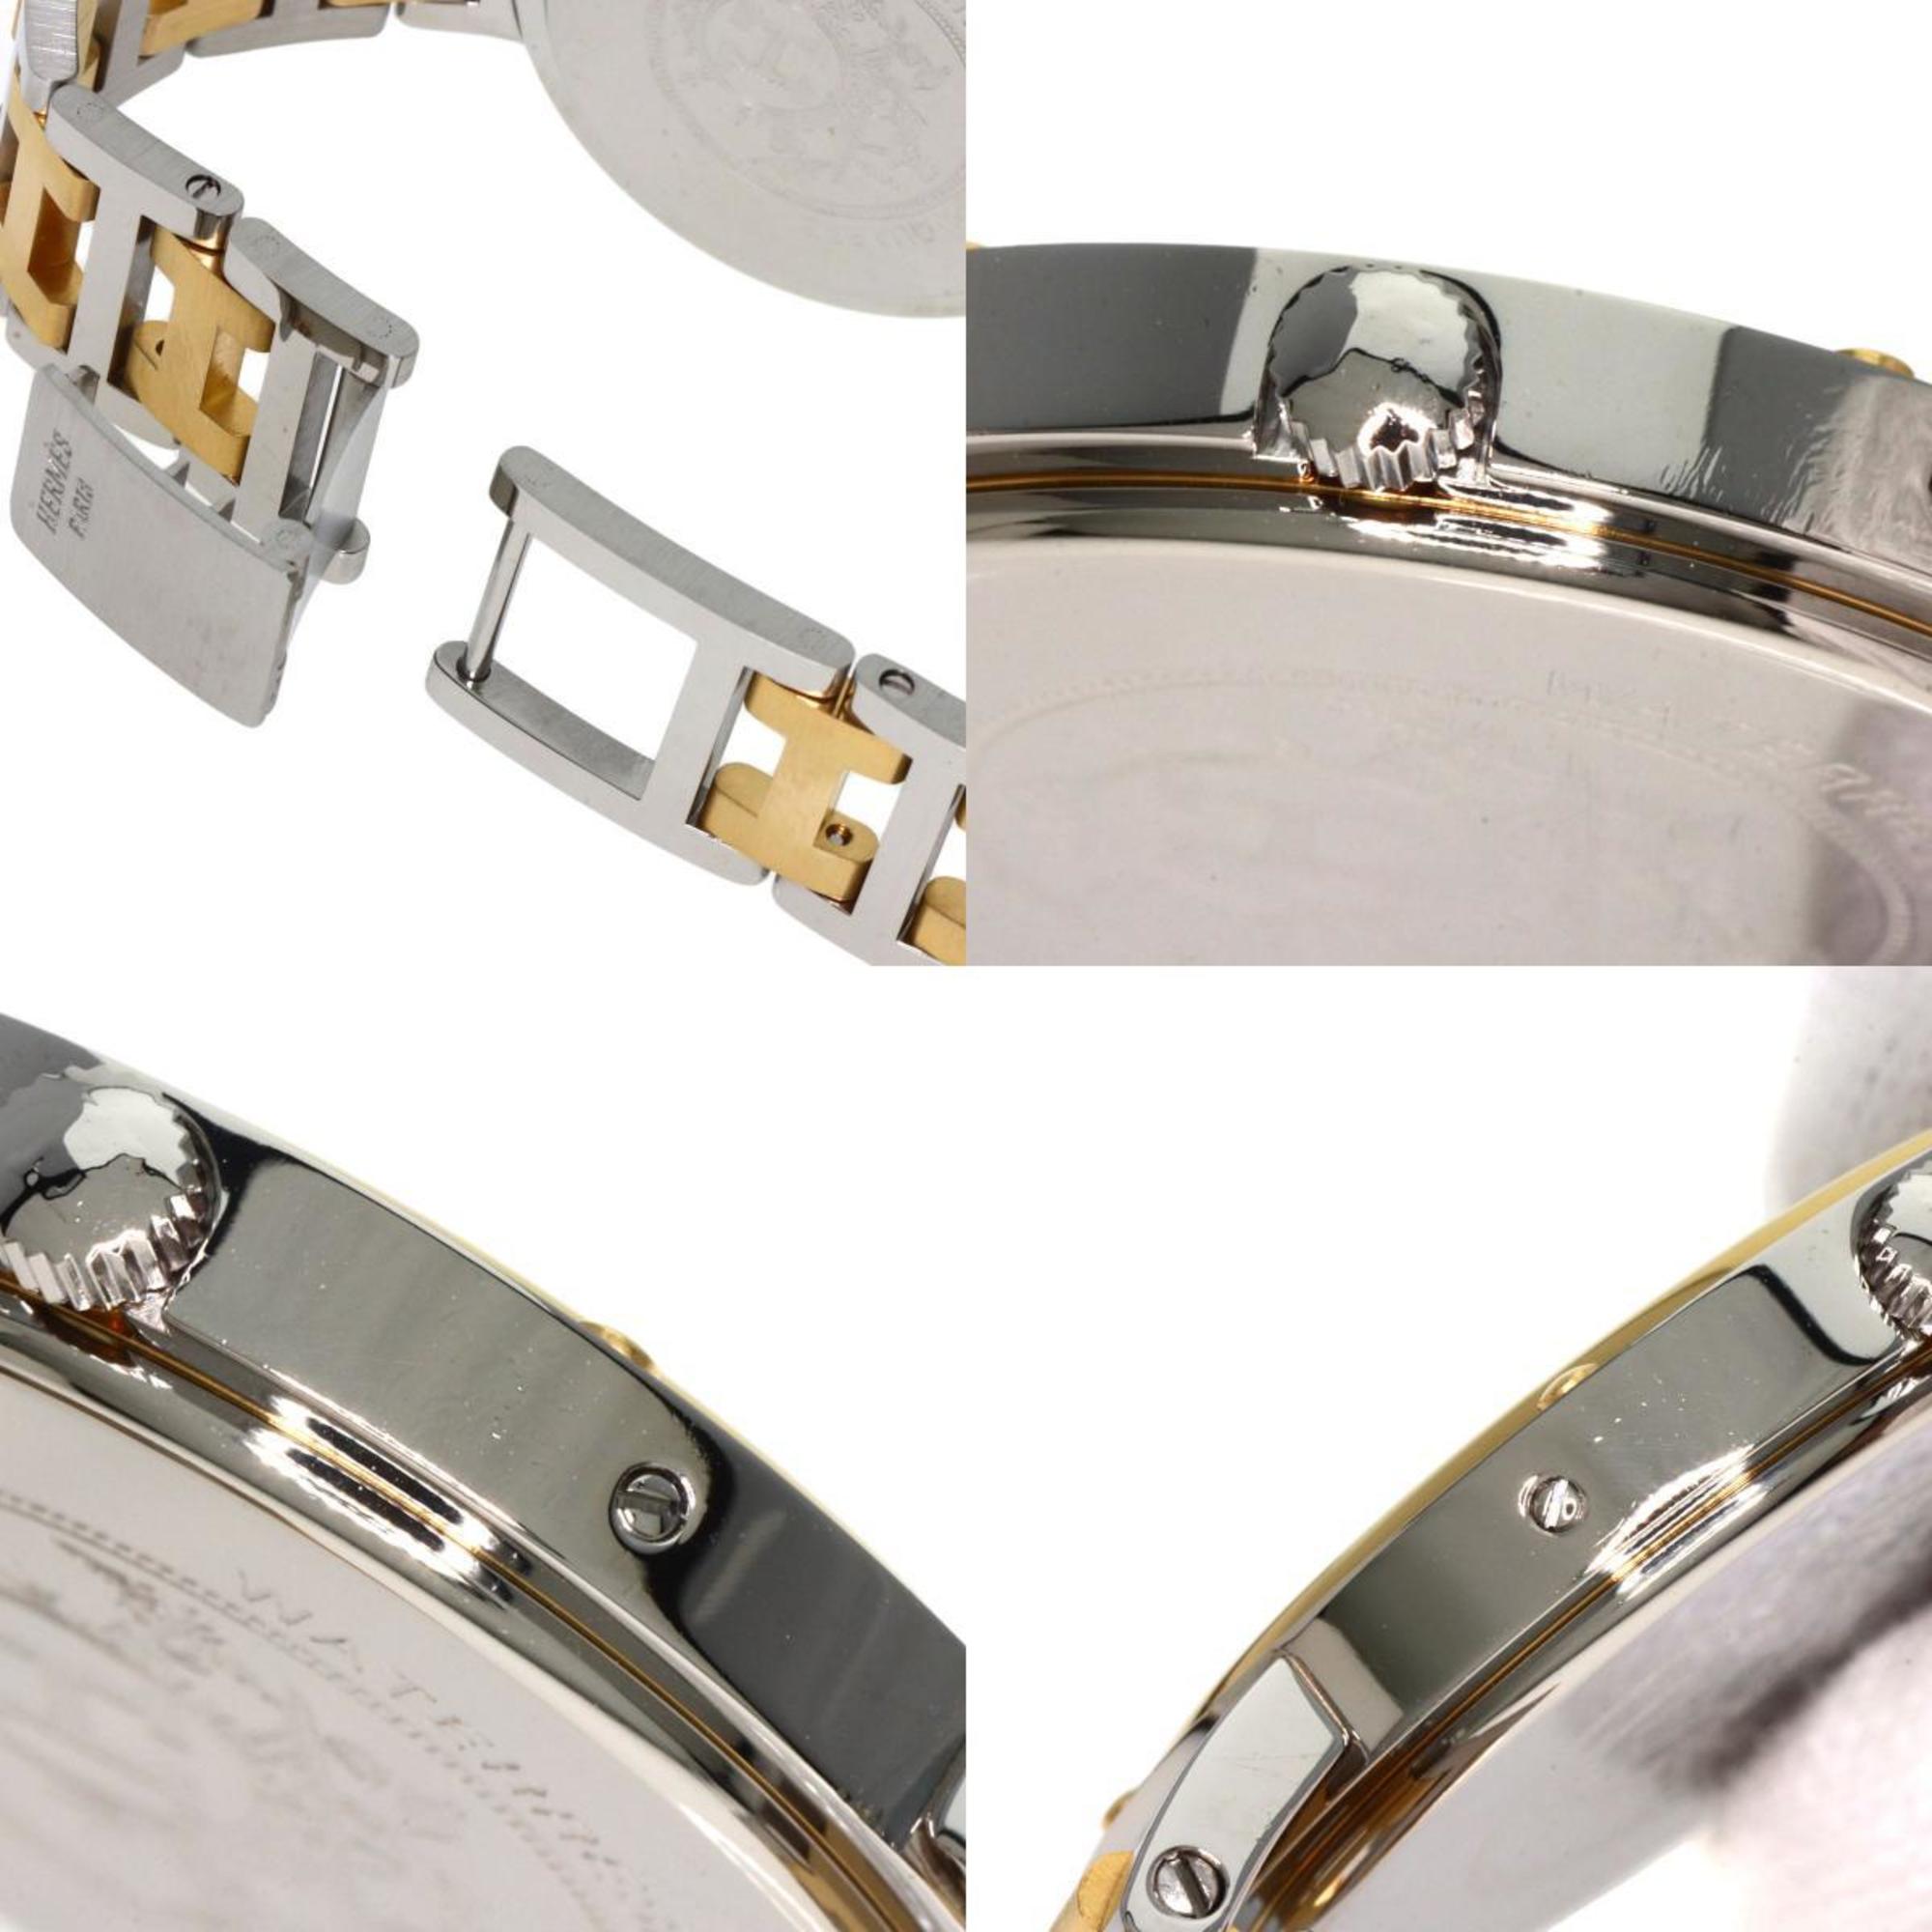 Hermes Clipper Watch Stainless Steel SSxGP Men's